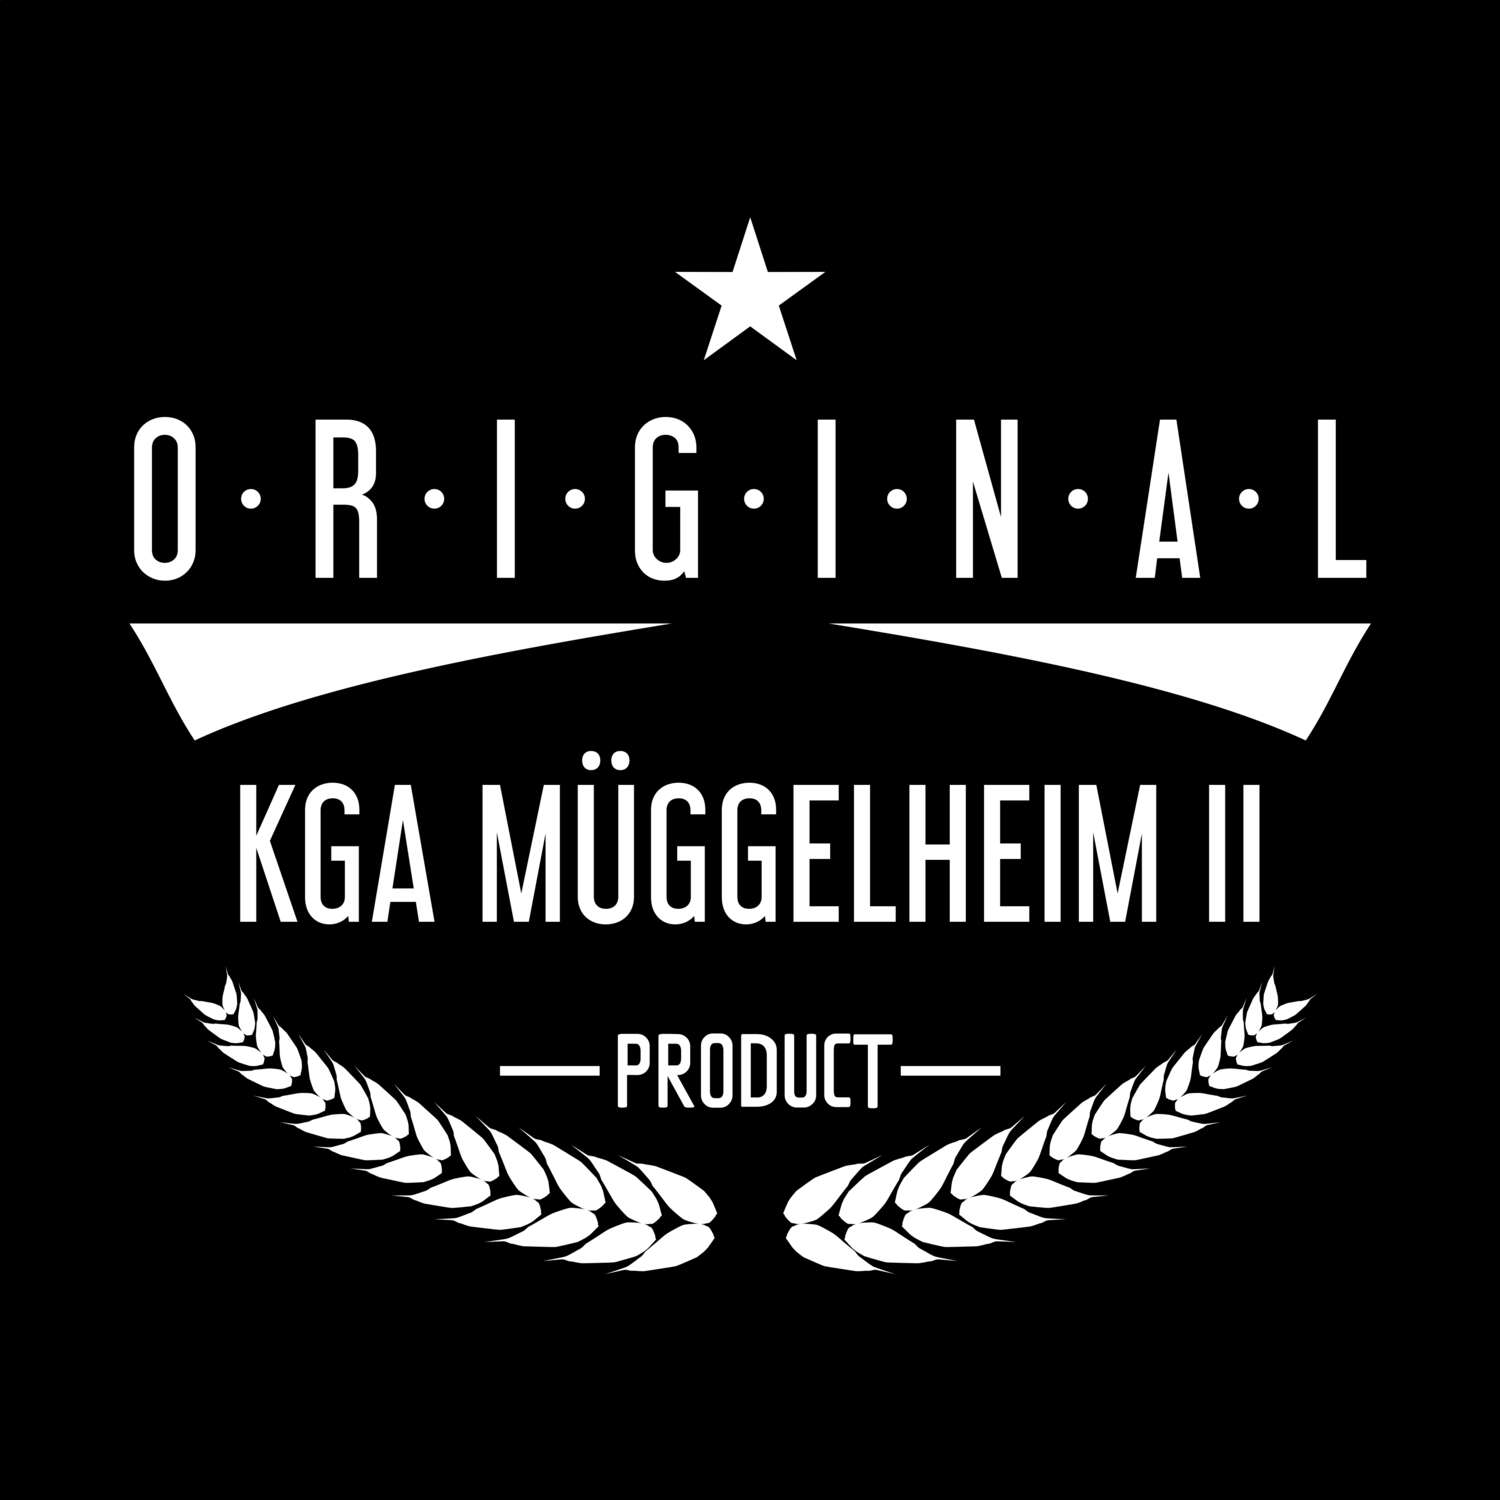 KGA Müggelheim II T-Shirt »Original Product«